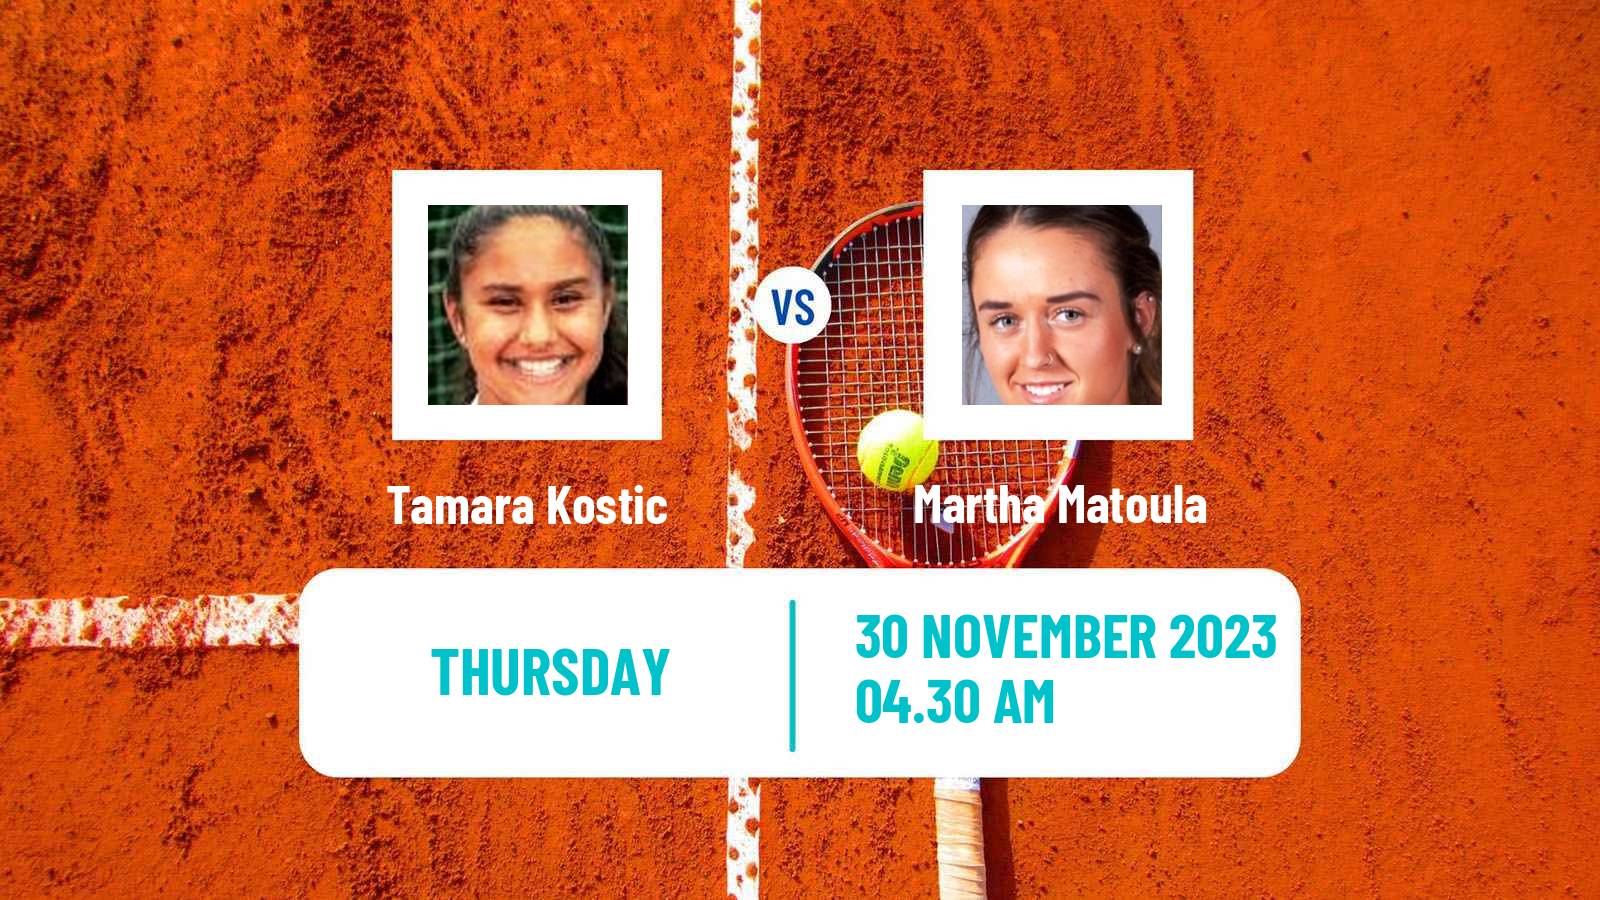 Tennis ITF W25 Limassol 2 Women Tamara Kostic - Martha Matoula